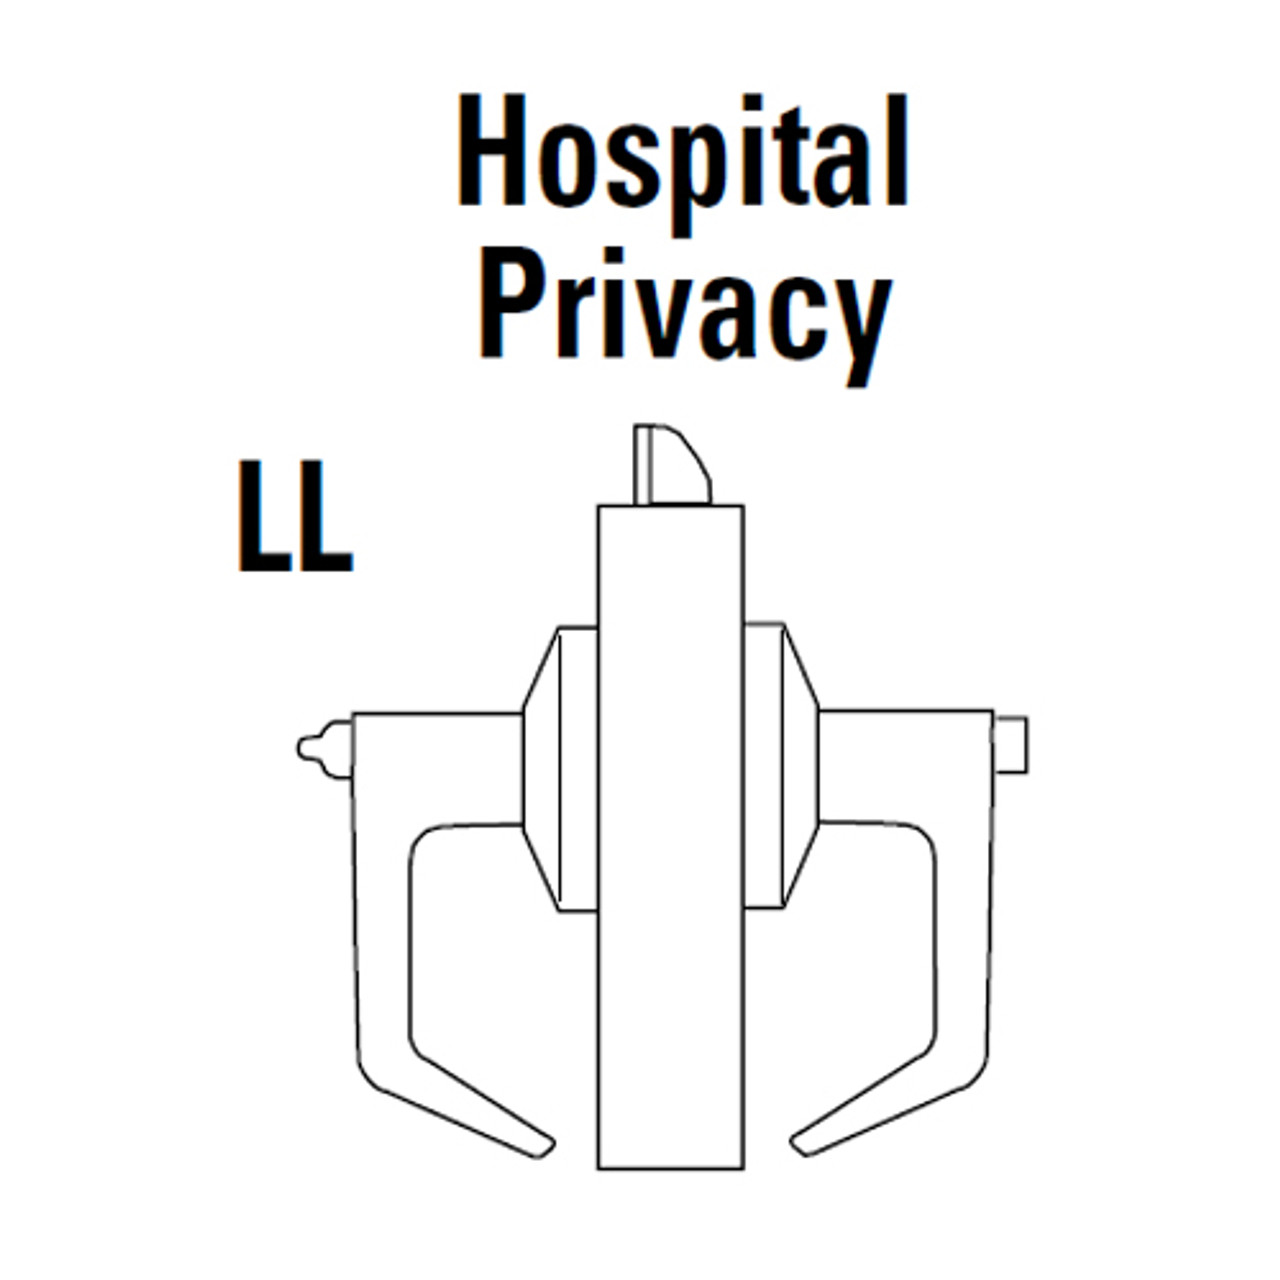 9K40LL14CSTK622 Best 9K Series Hospital Privacy Heavy Duty Cylindrical Lever Locks in Black